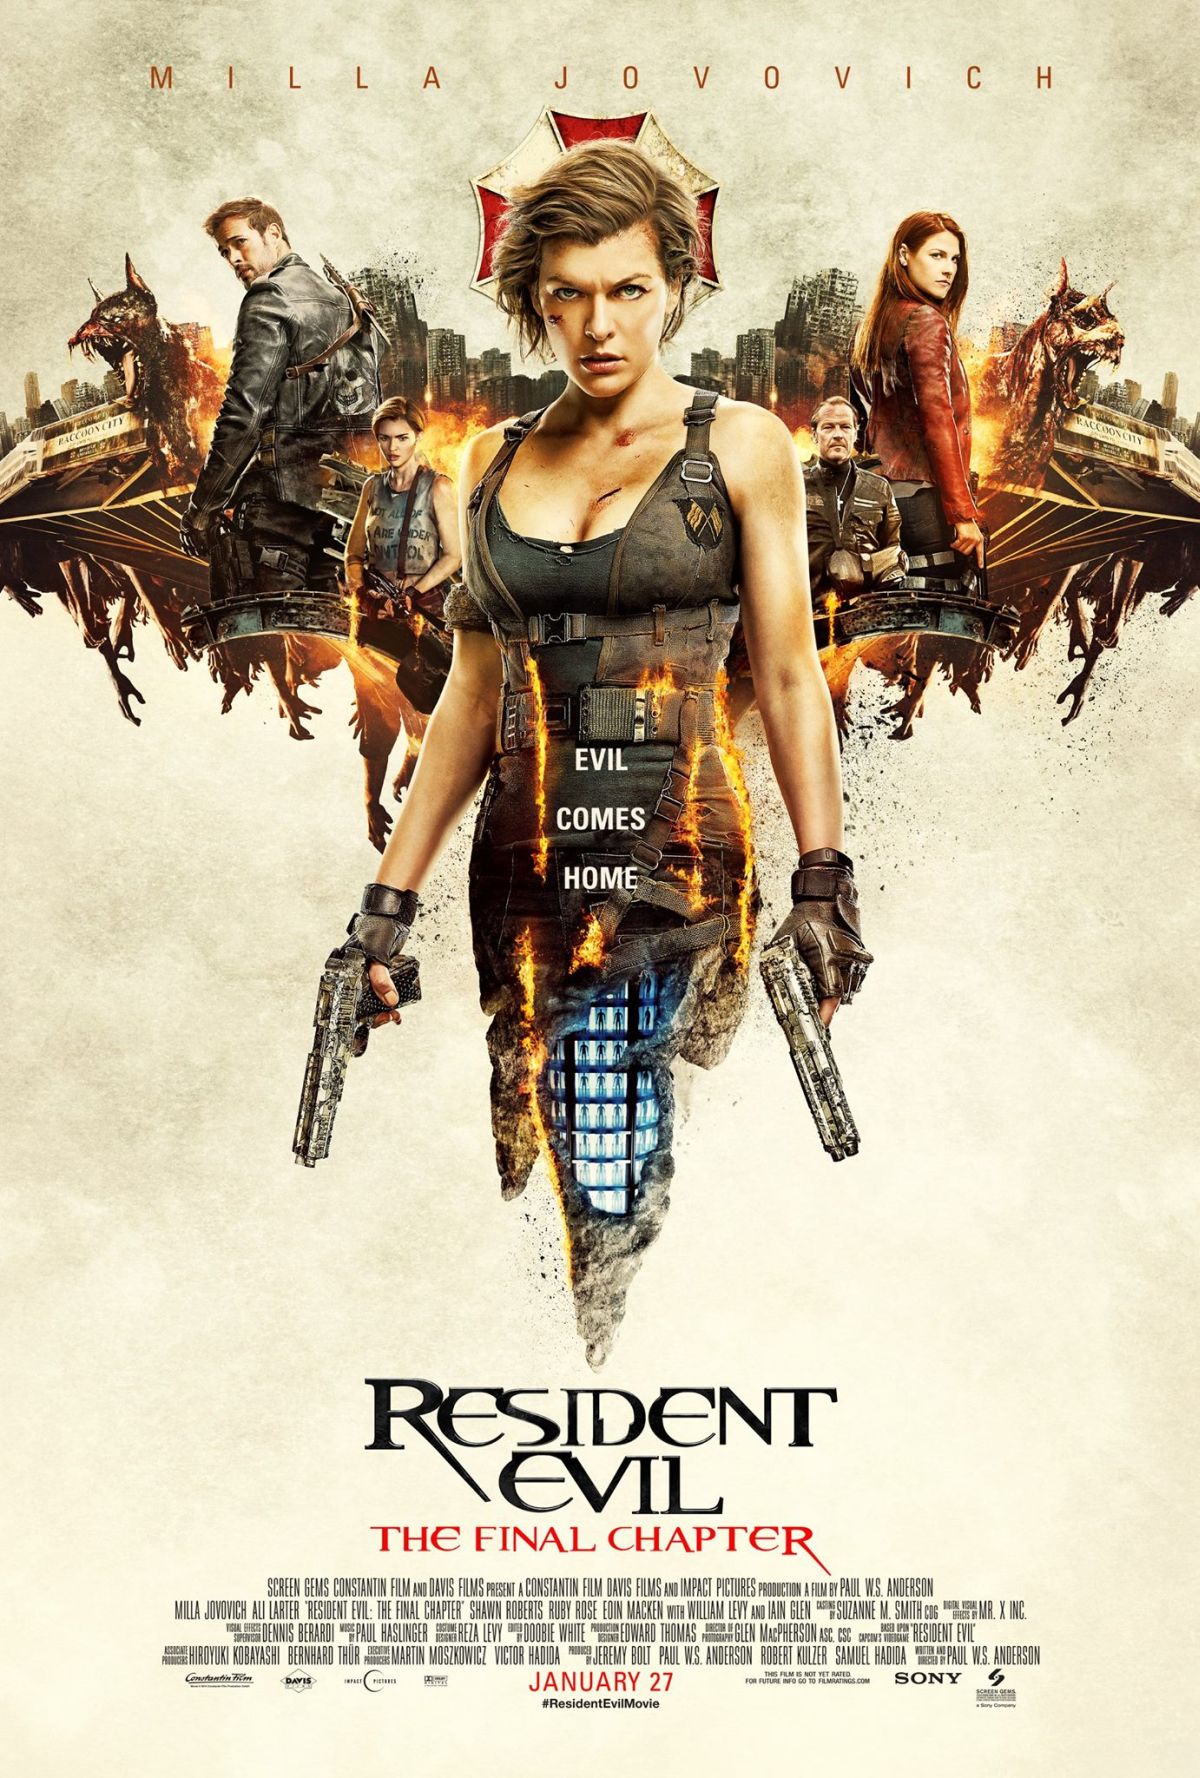 Crítica  Resident Evil 5: Retribuição - Plano Crítico